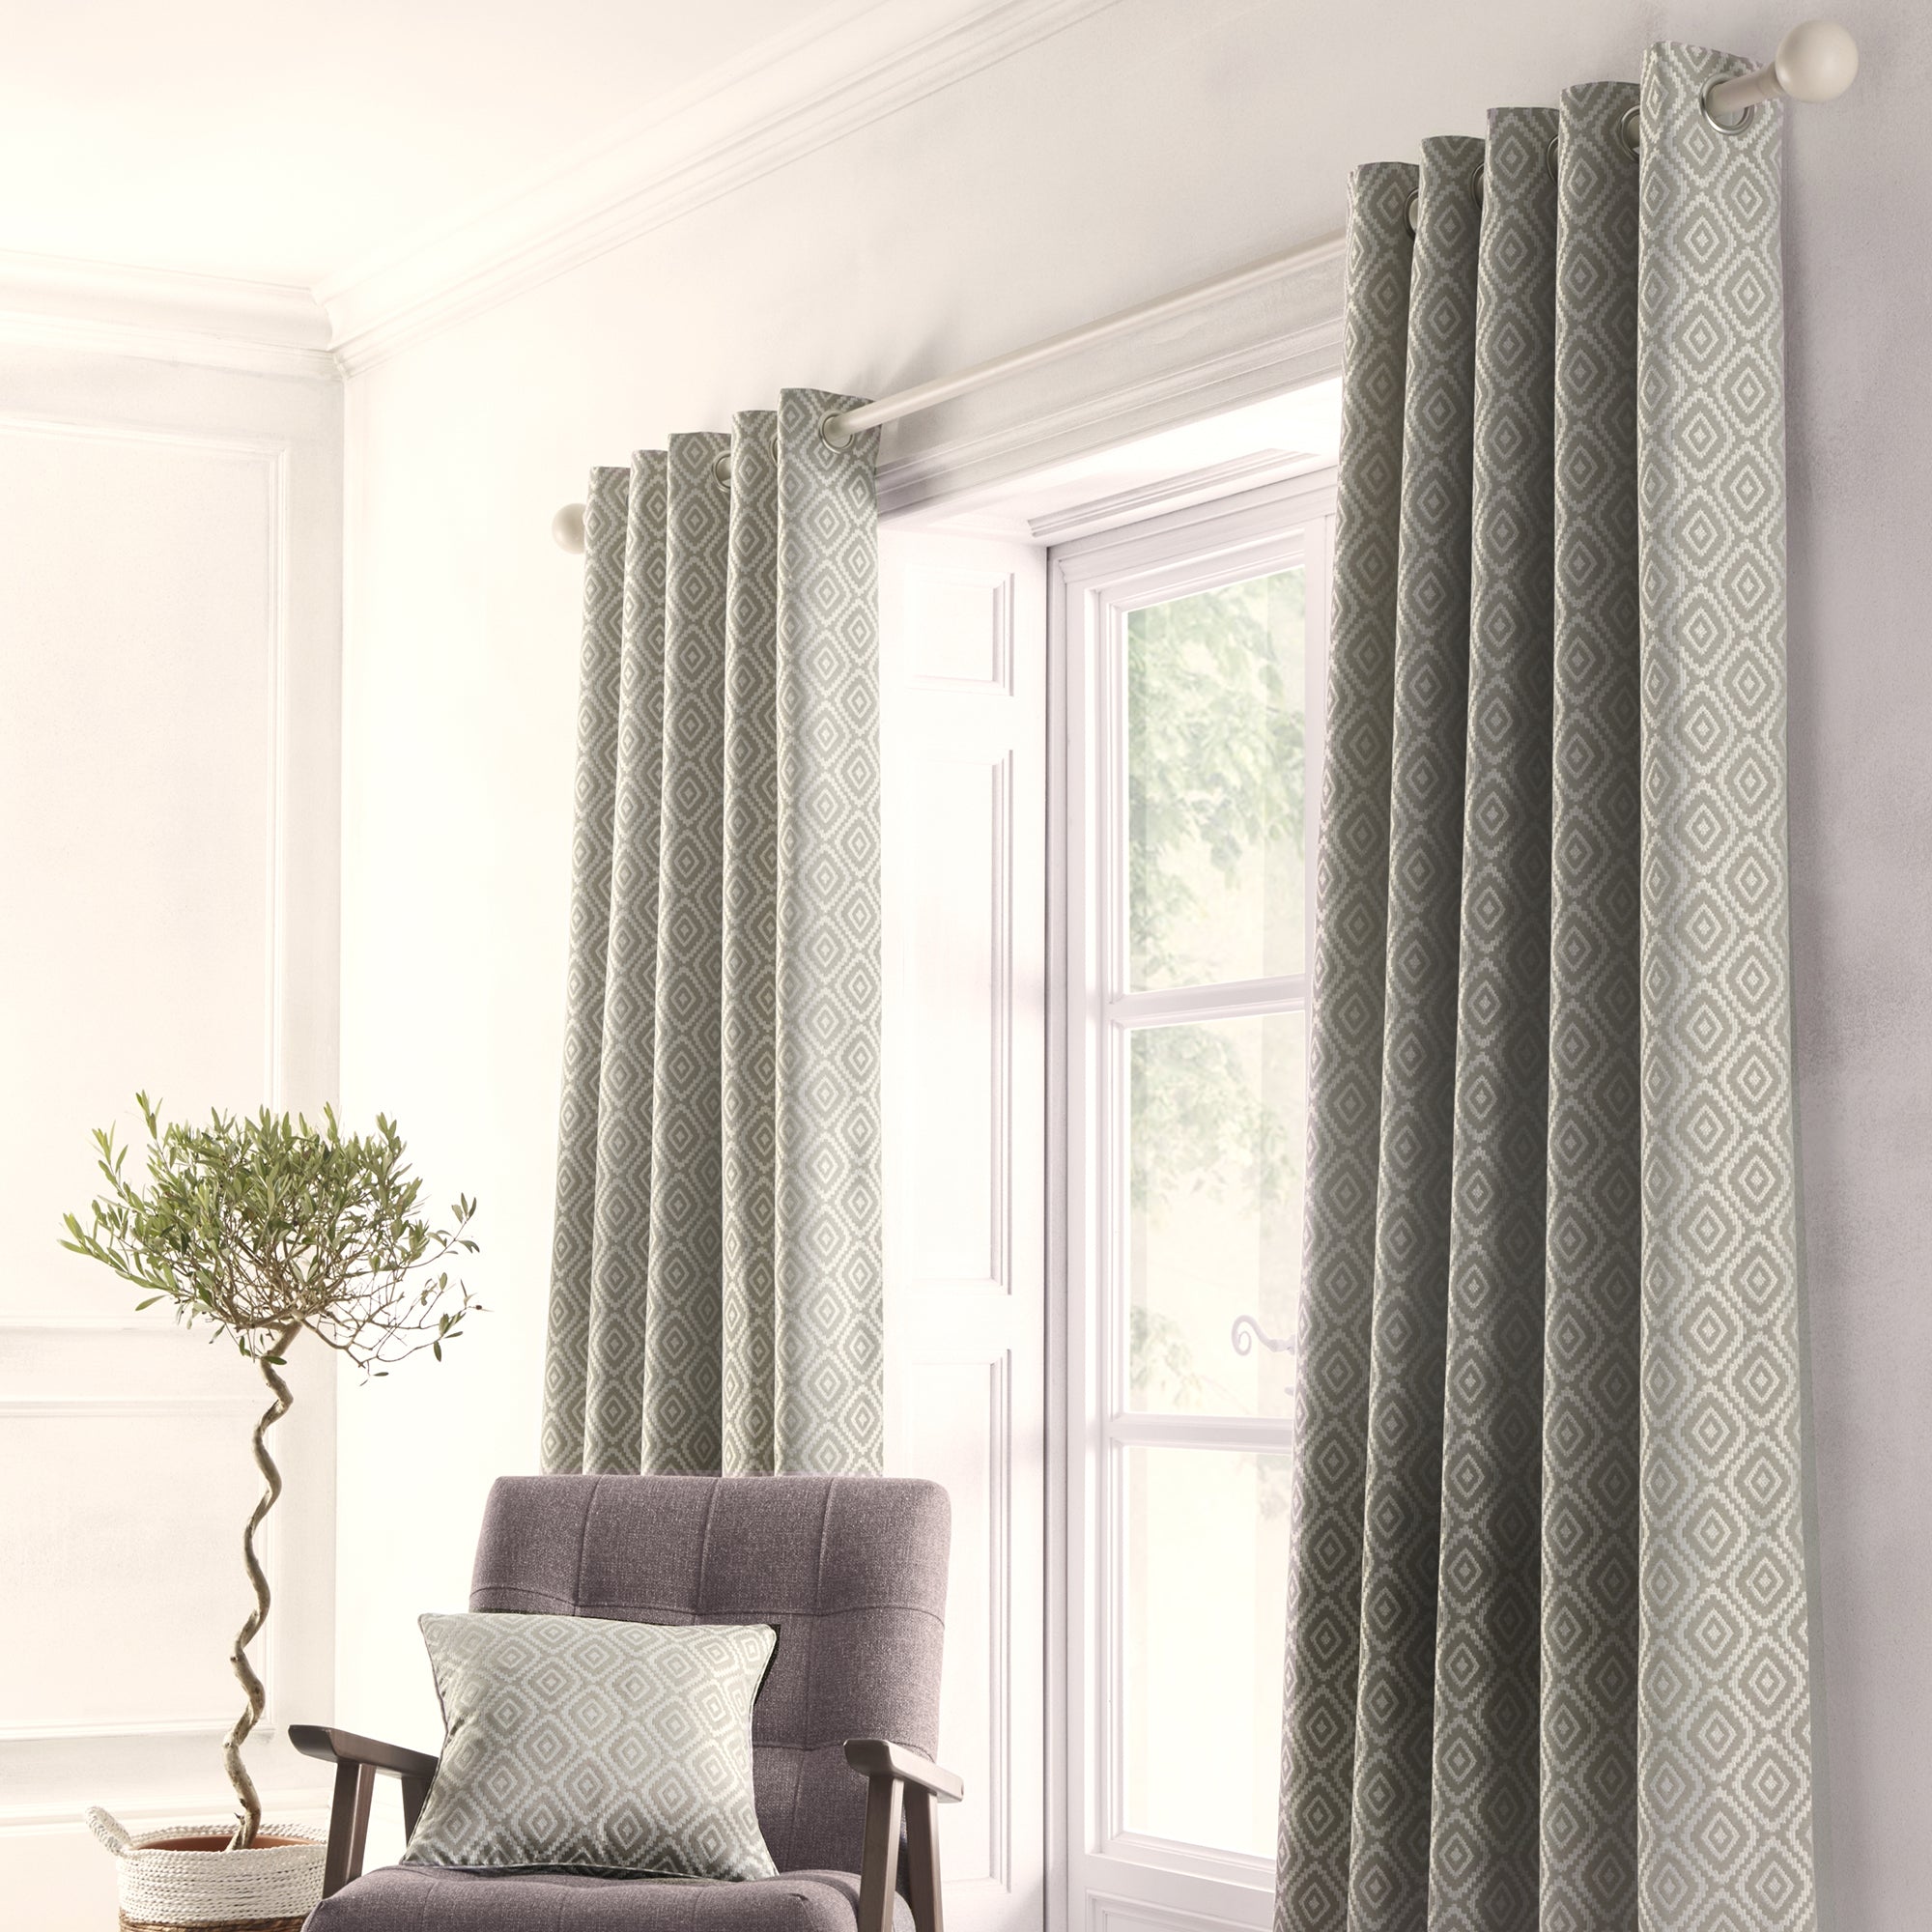 Asha - Jacquard Pair of Eyelet Curtains in Grey - By Appletree Loft